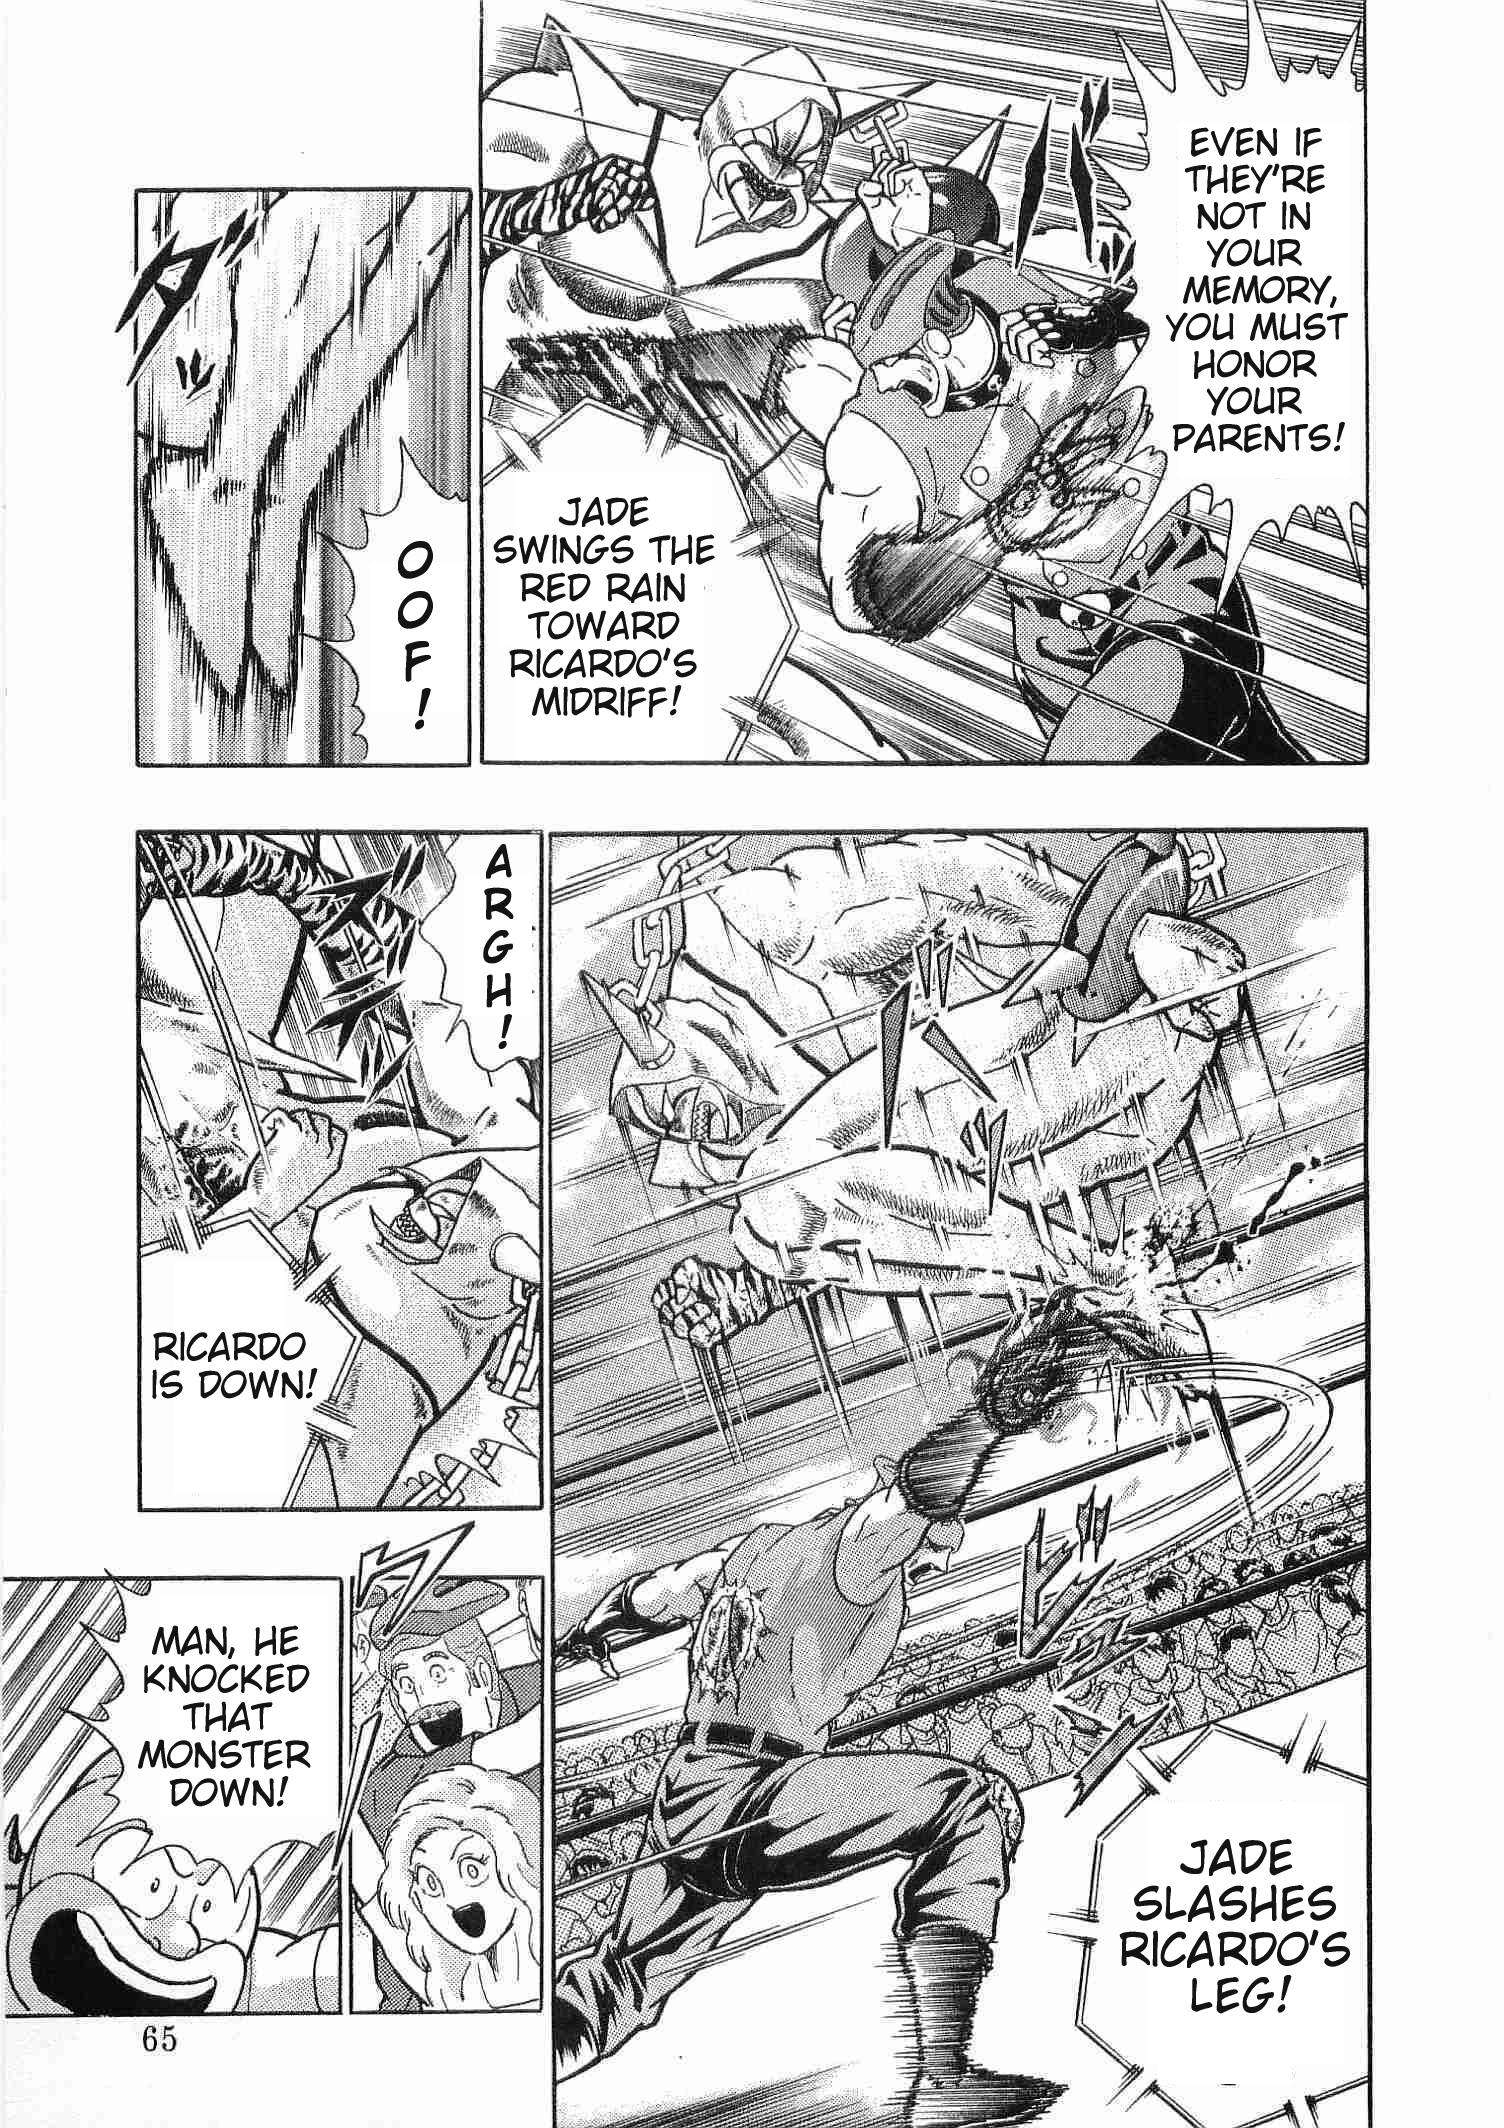 Kinnikuman II Sei - 2nd Generation - chapter 175 - #3